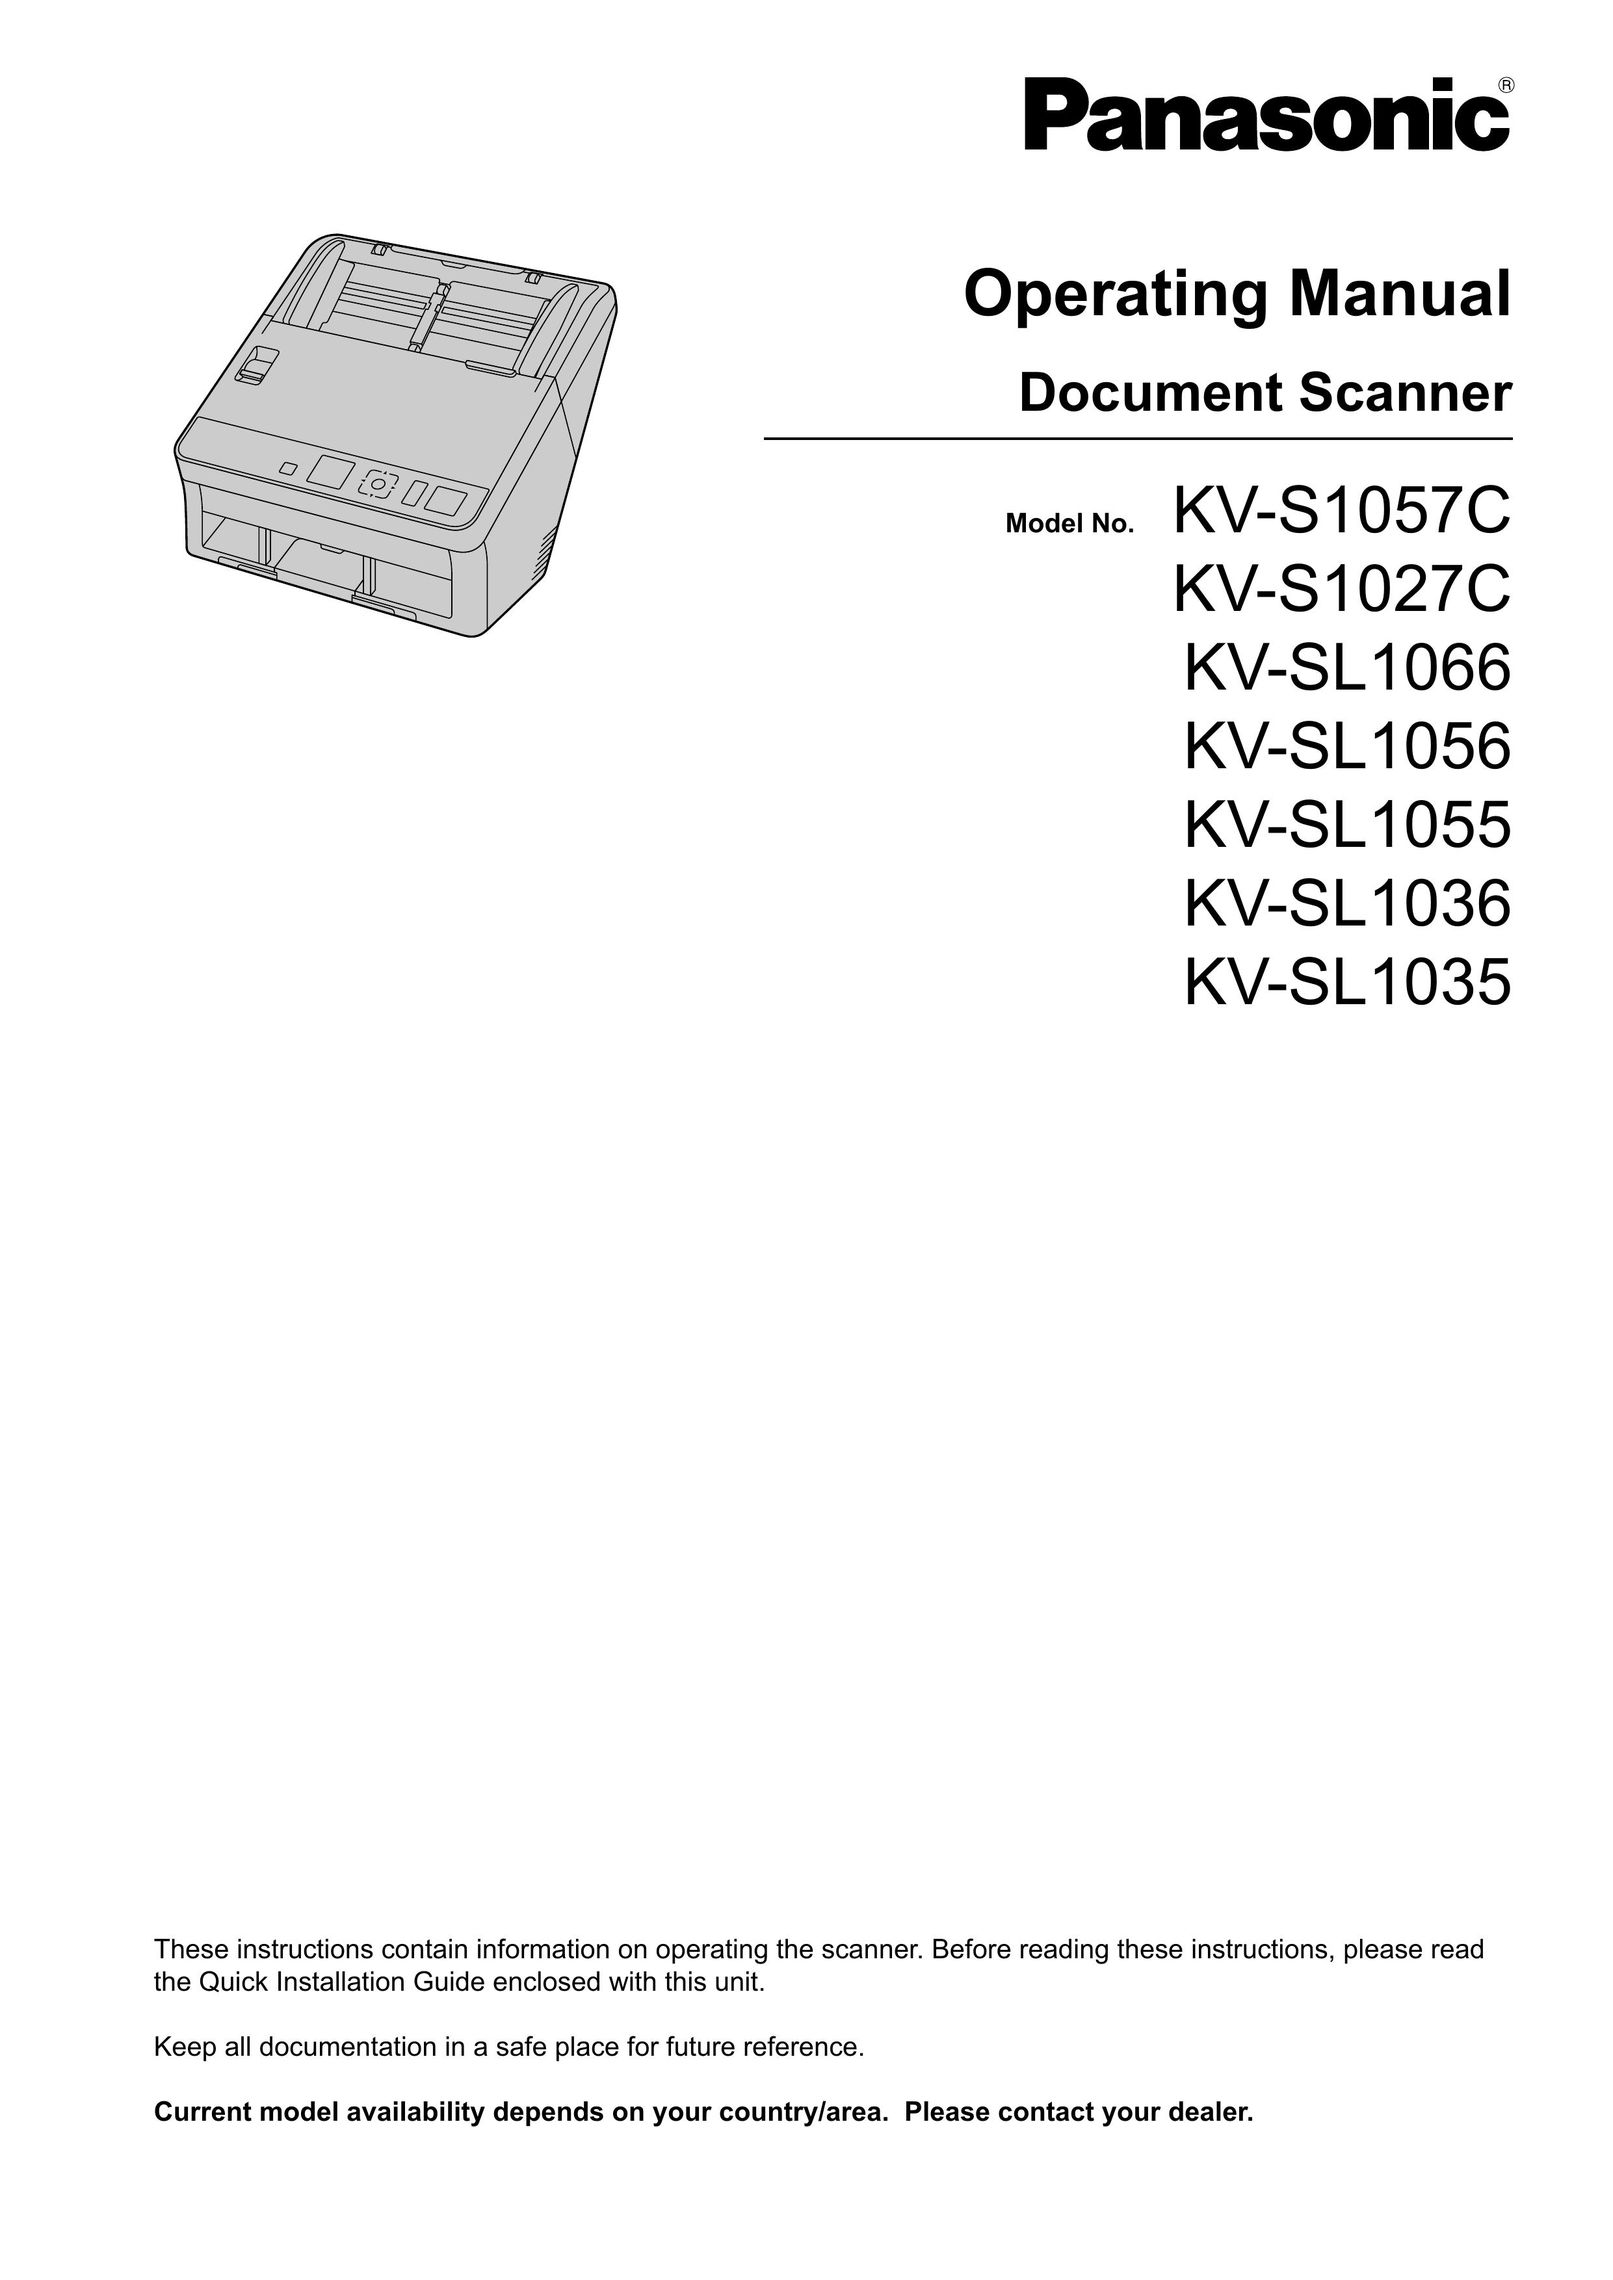 Panasonic KV-SL1036 Scanner User Manual